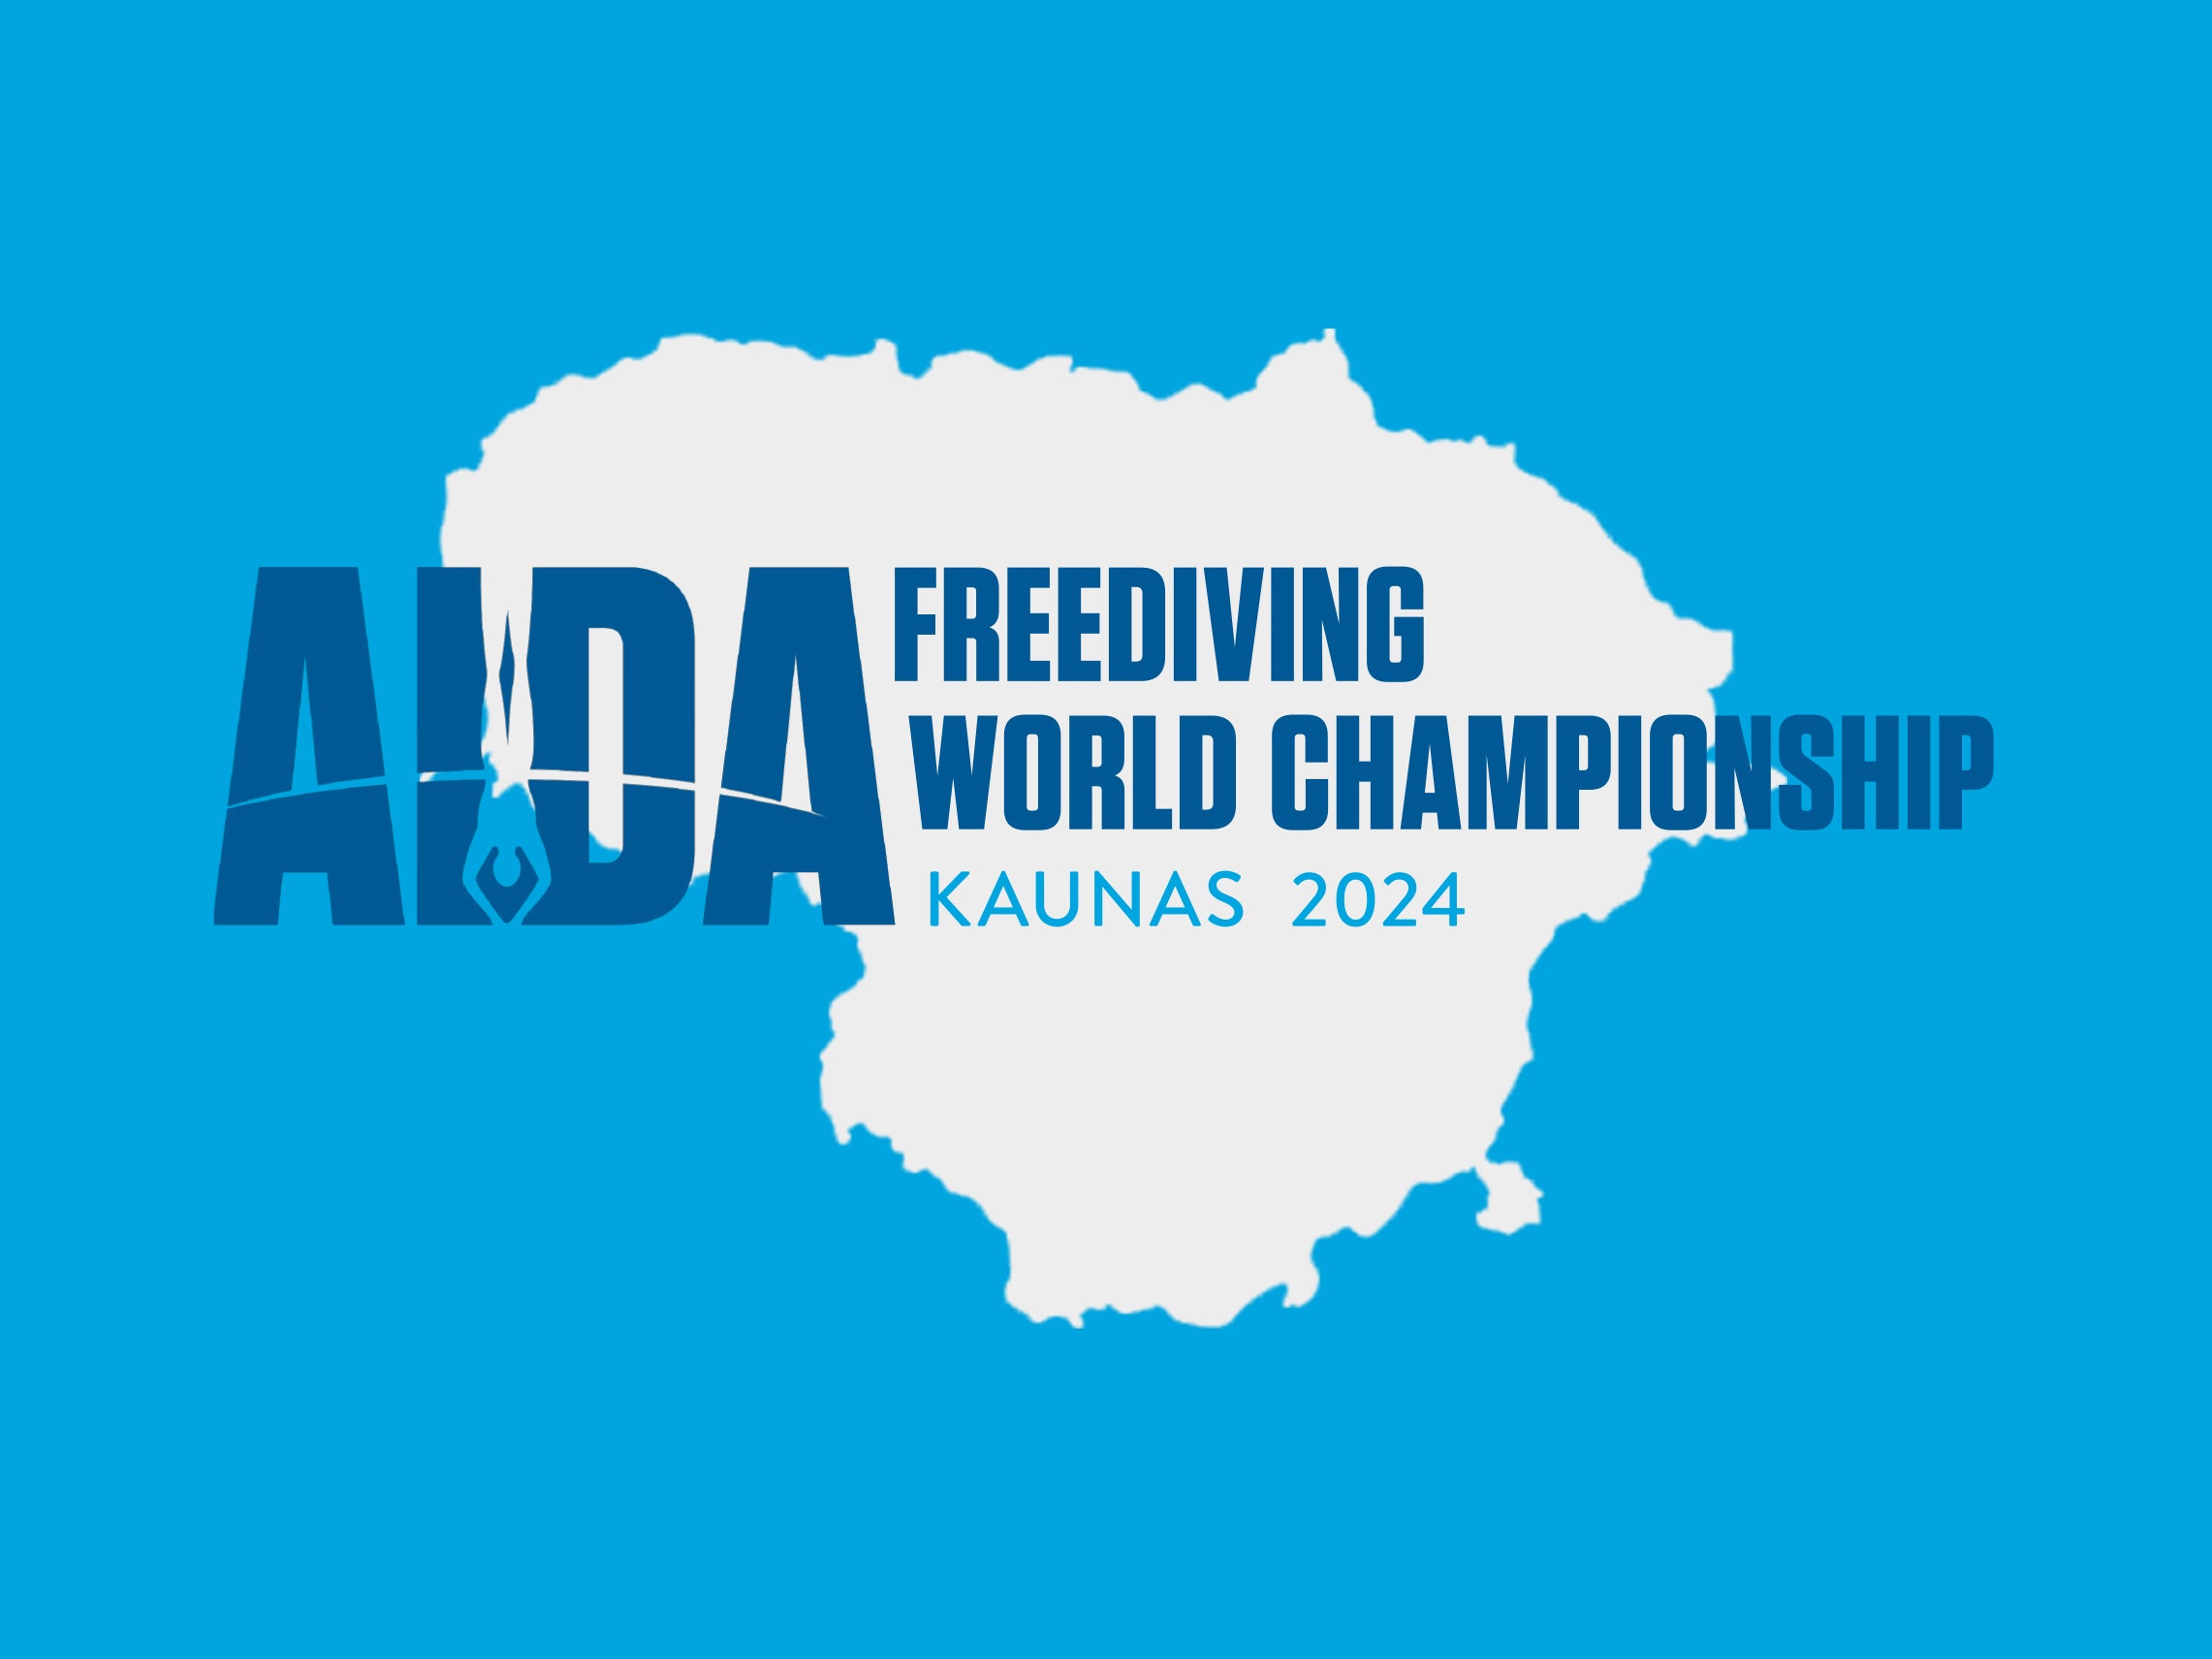 32nd AIDA Freediving World Championship